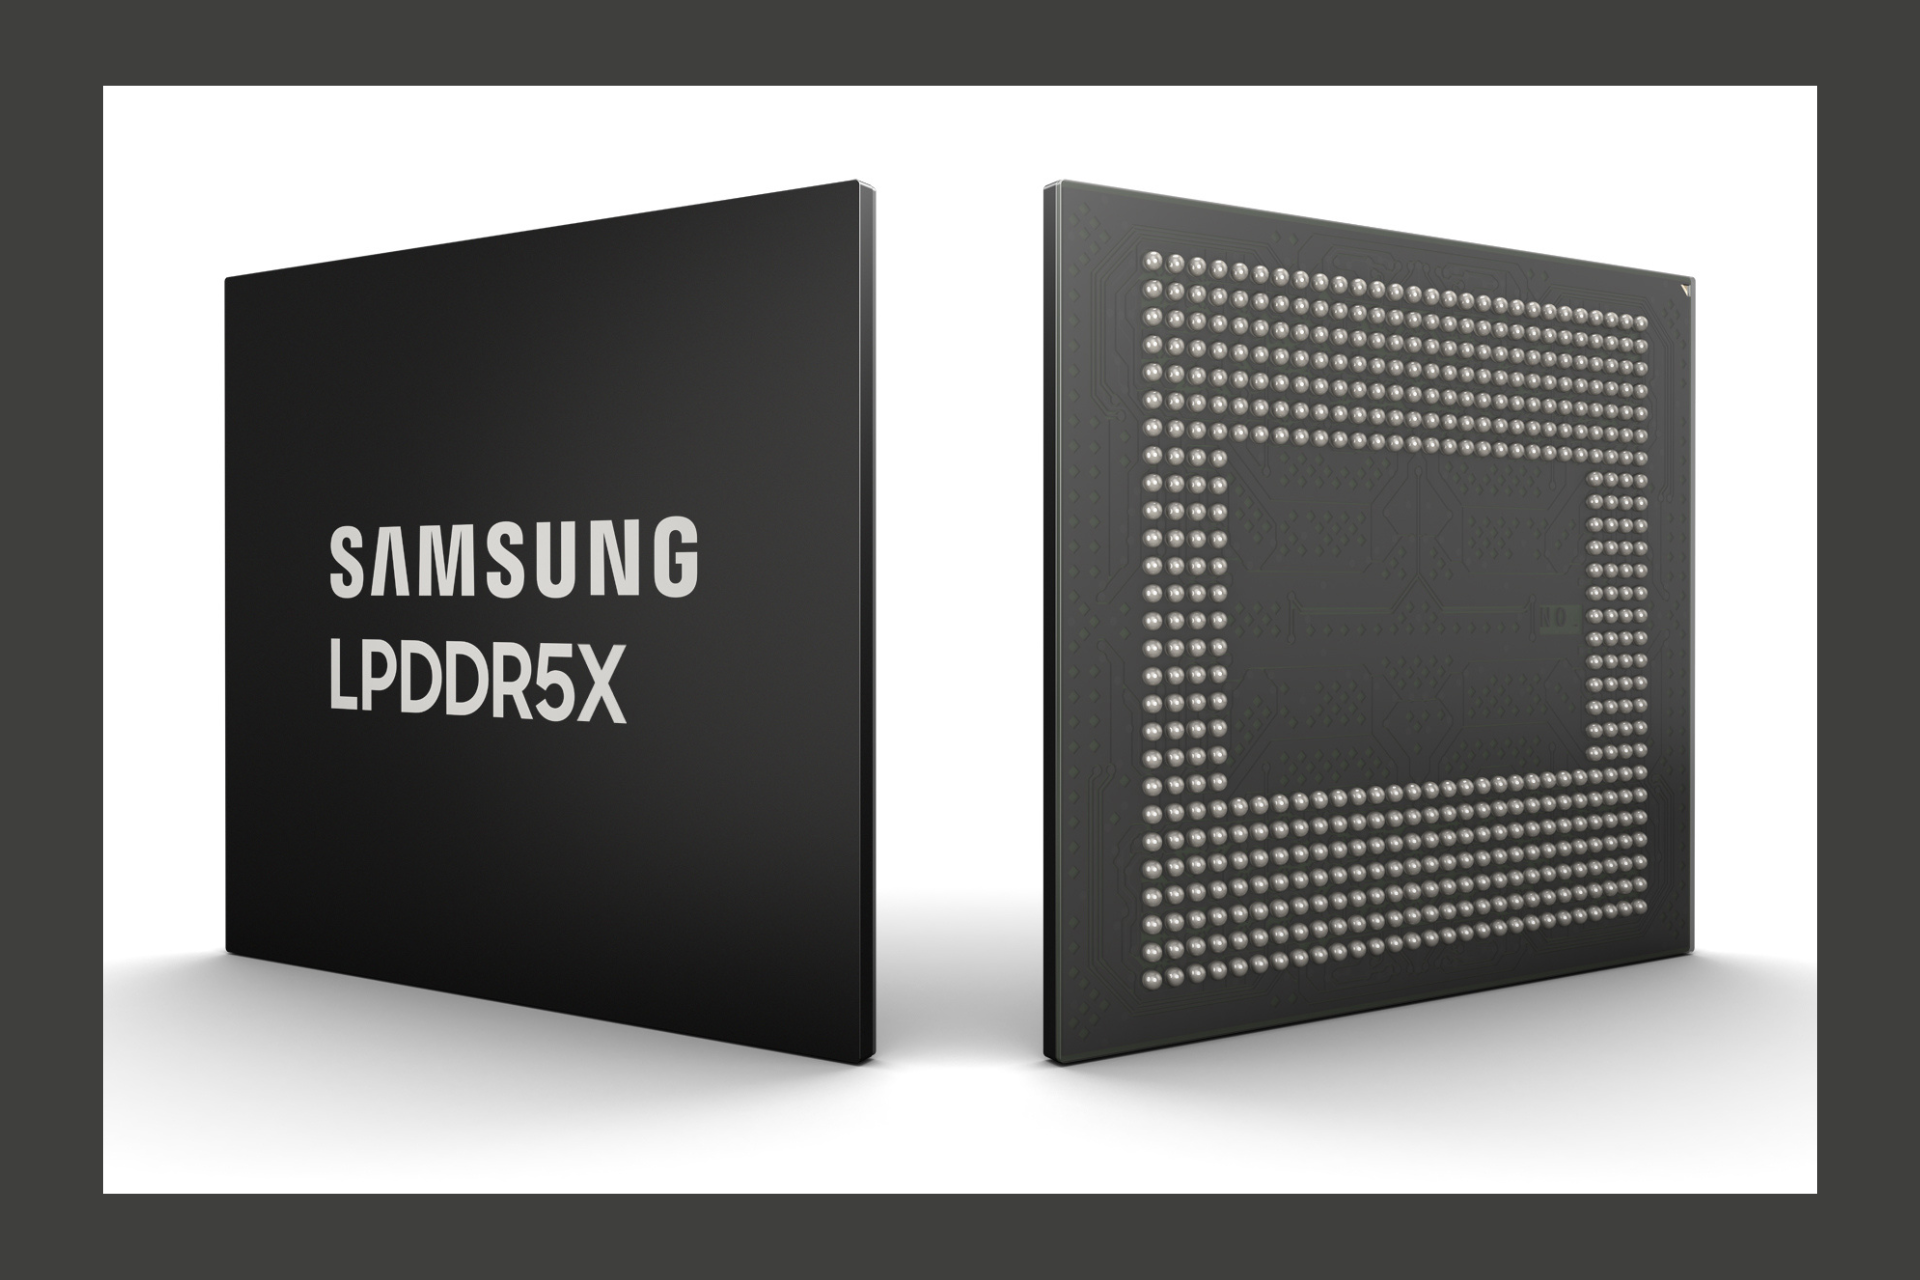 Samsung LPDDR5X high performance memory modules